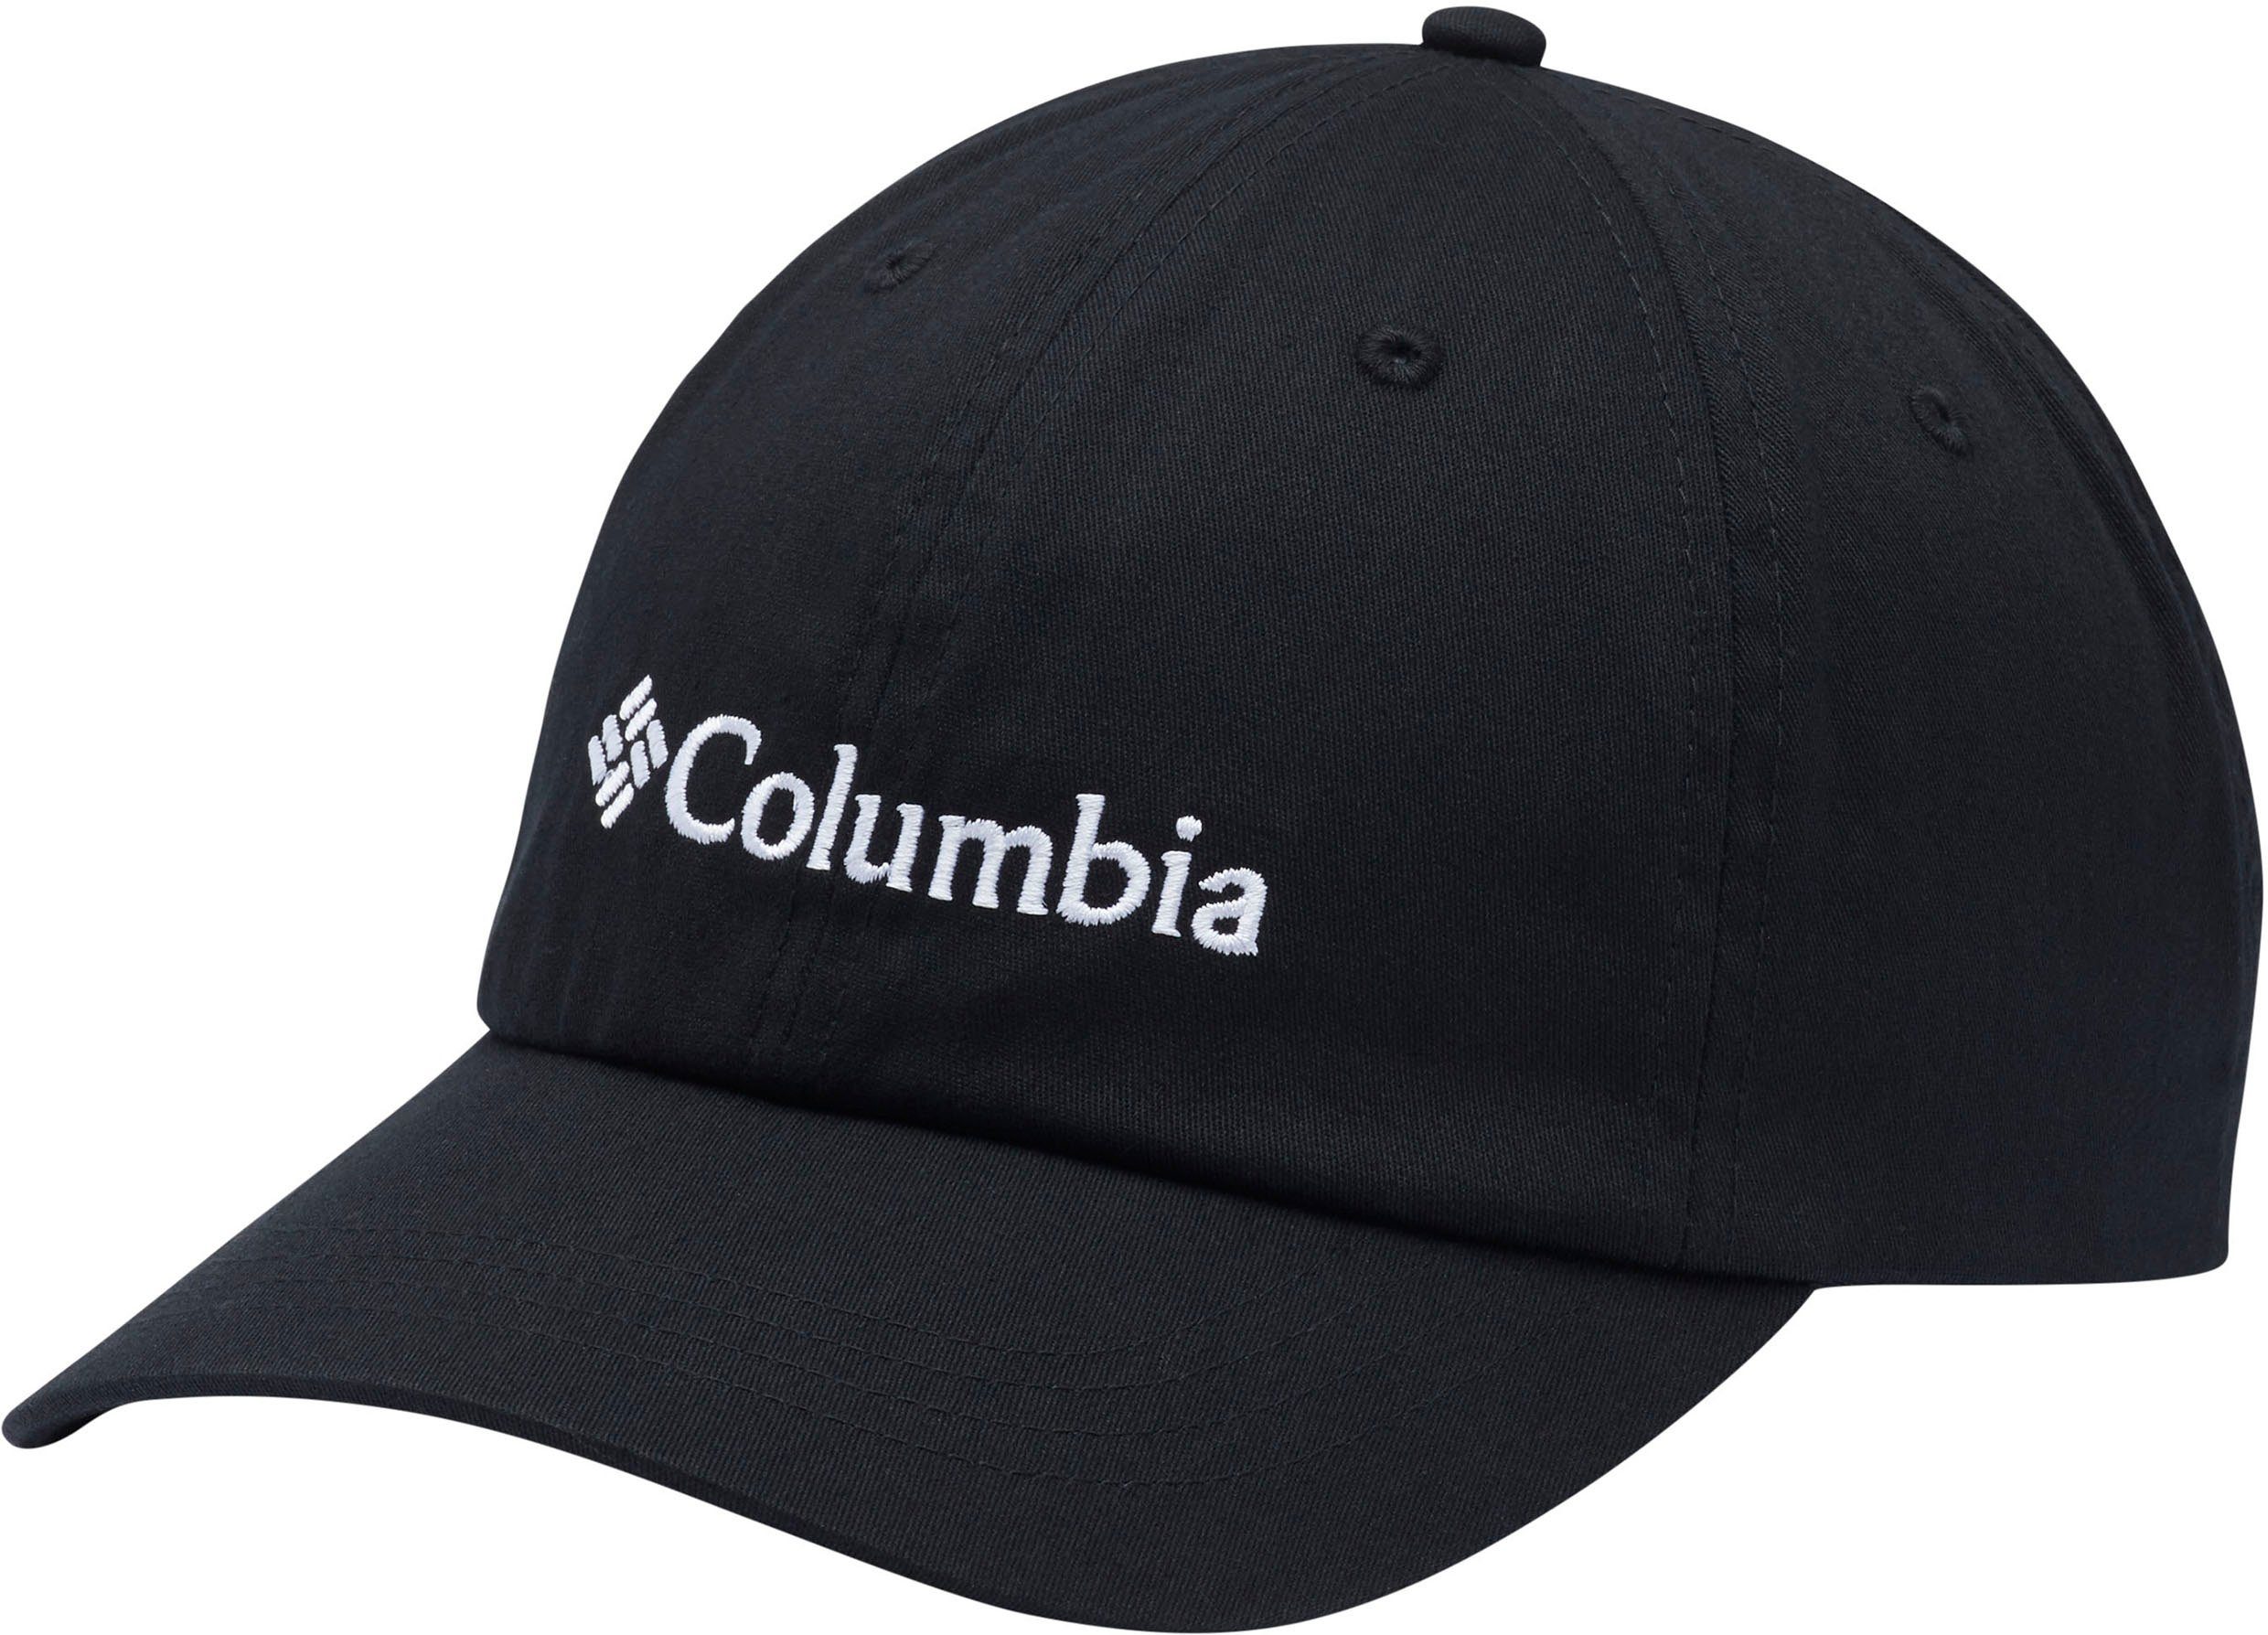 Columbia snapback cap